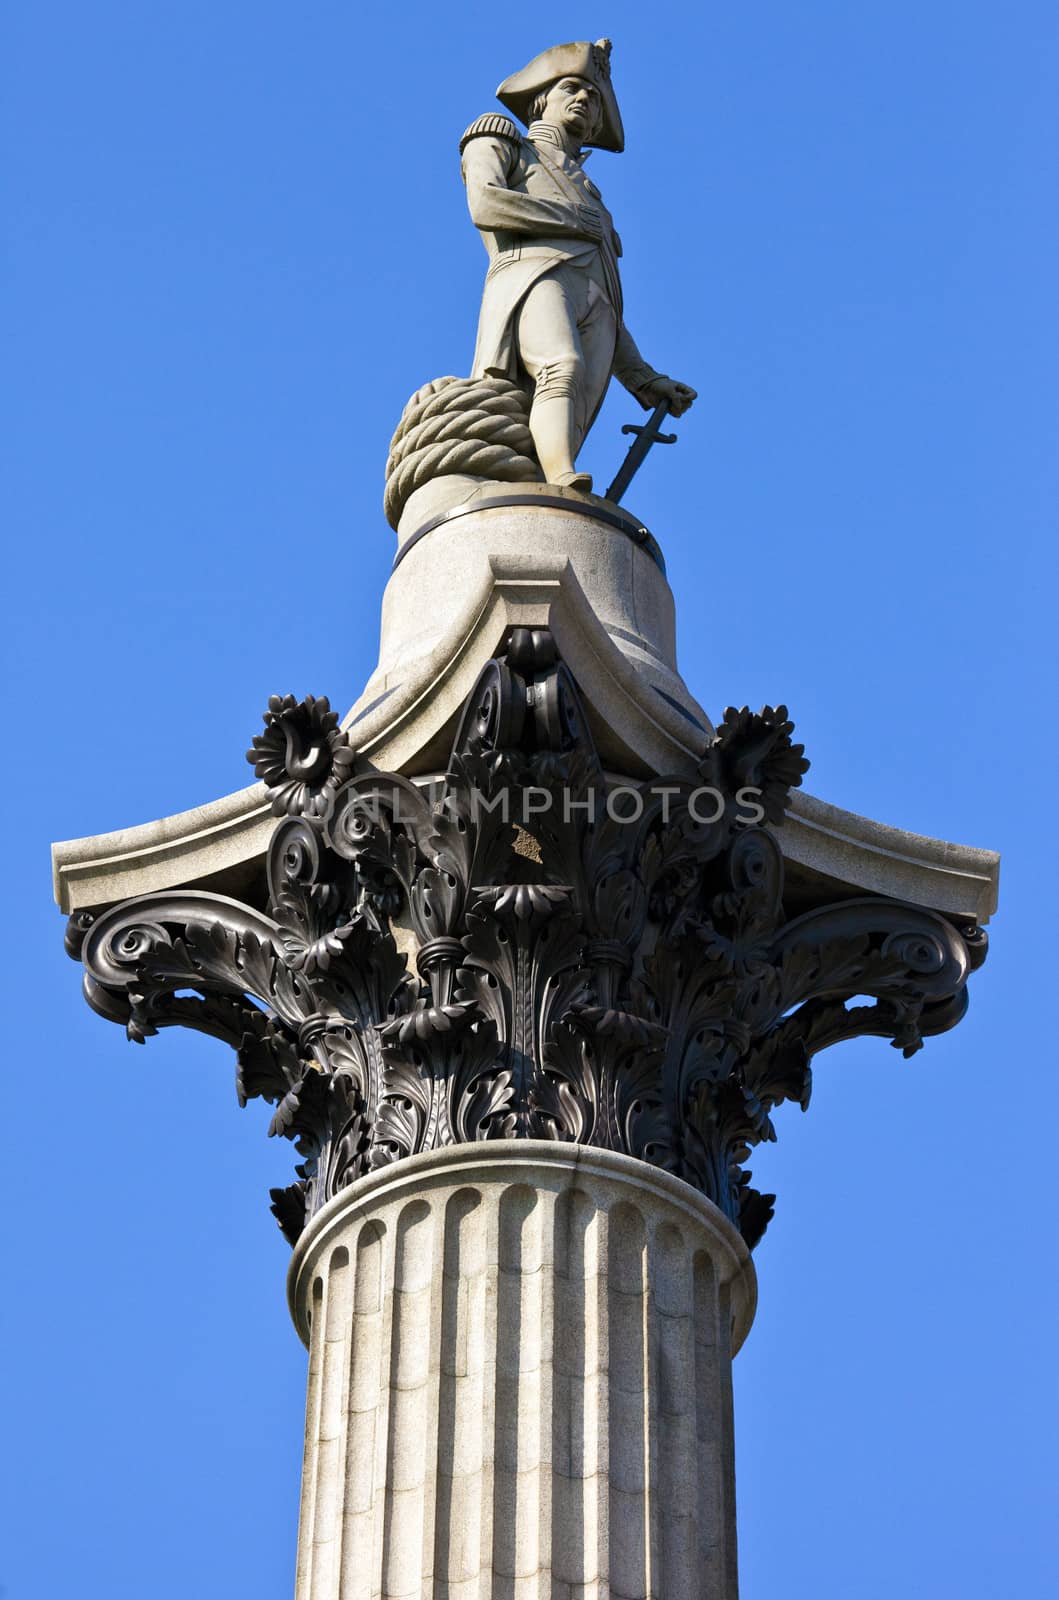 Nelson's Column in London.